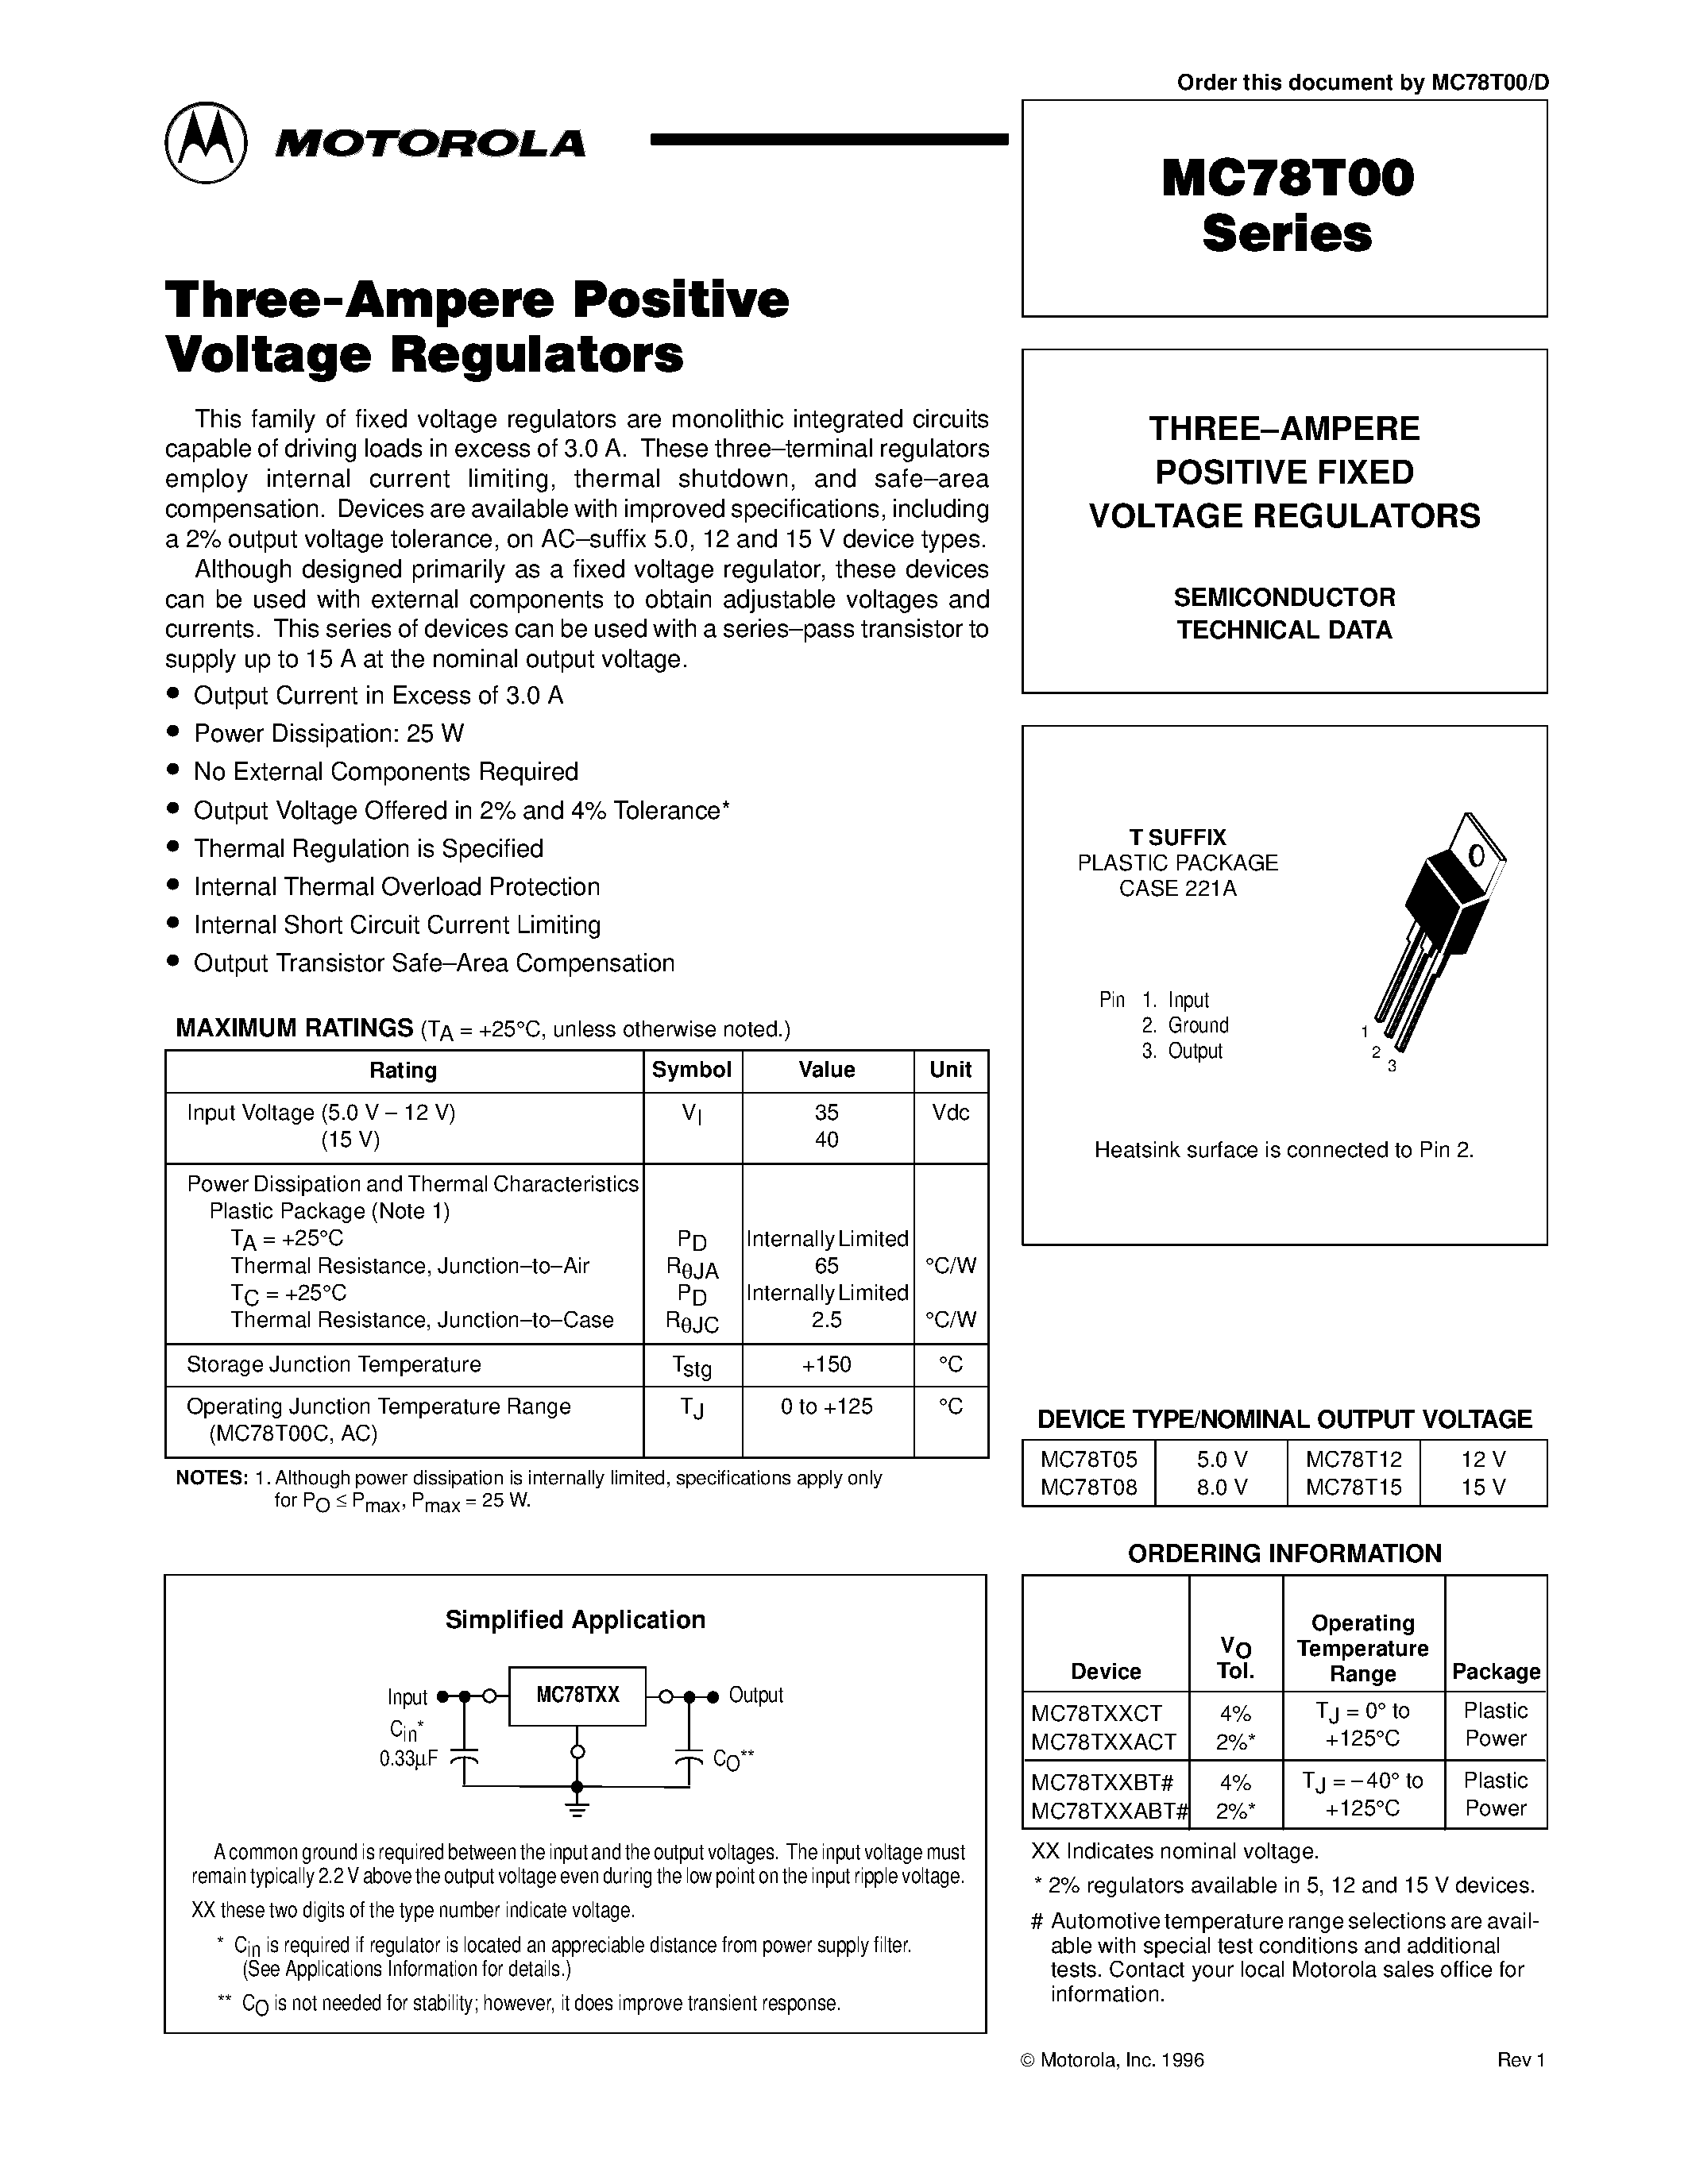 Datasheet MC78T05BT - THREE-AMPERE POSITIVE FIXED VOLTAGE REGULATORS page 1